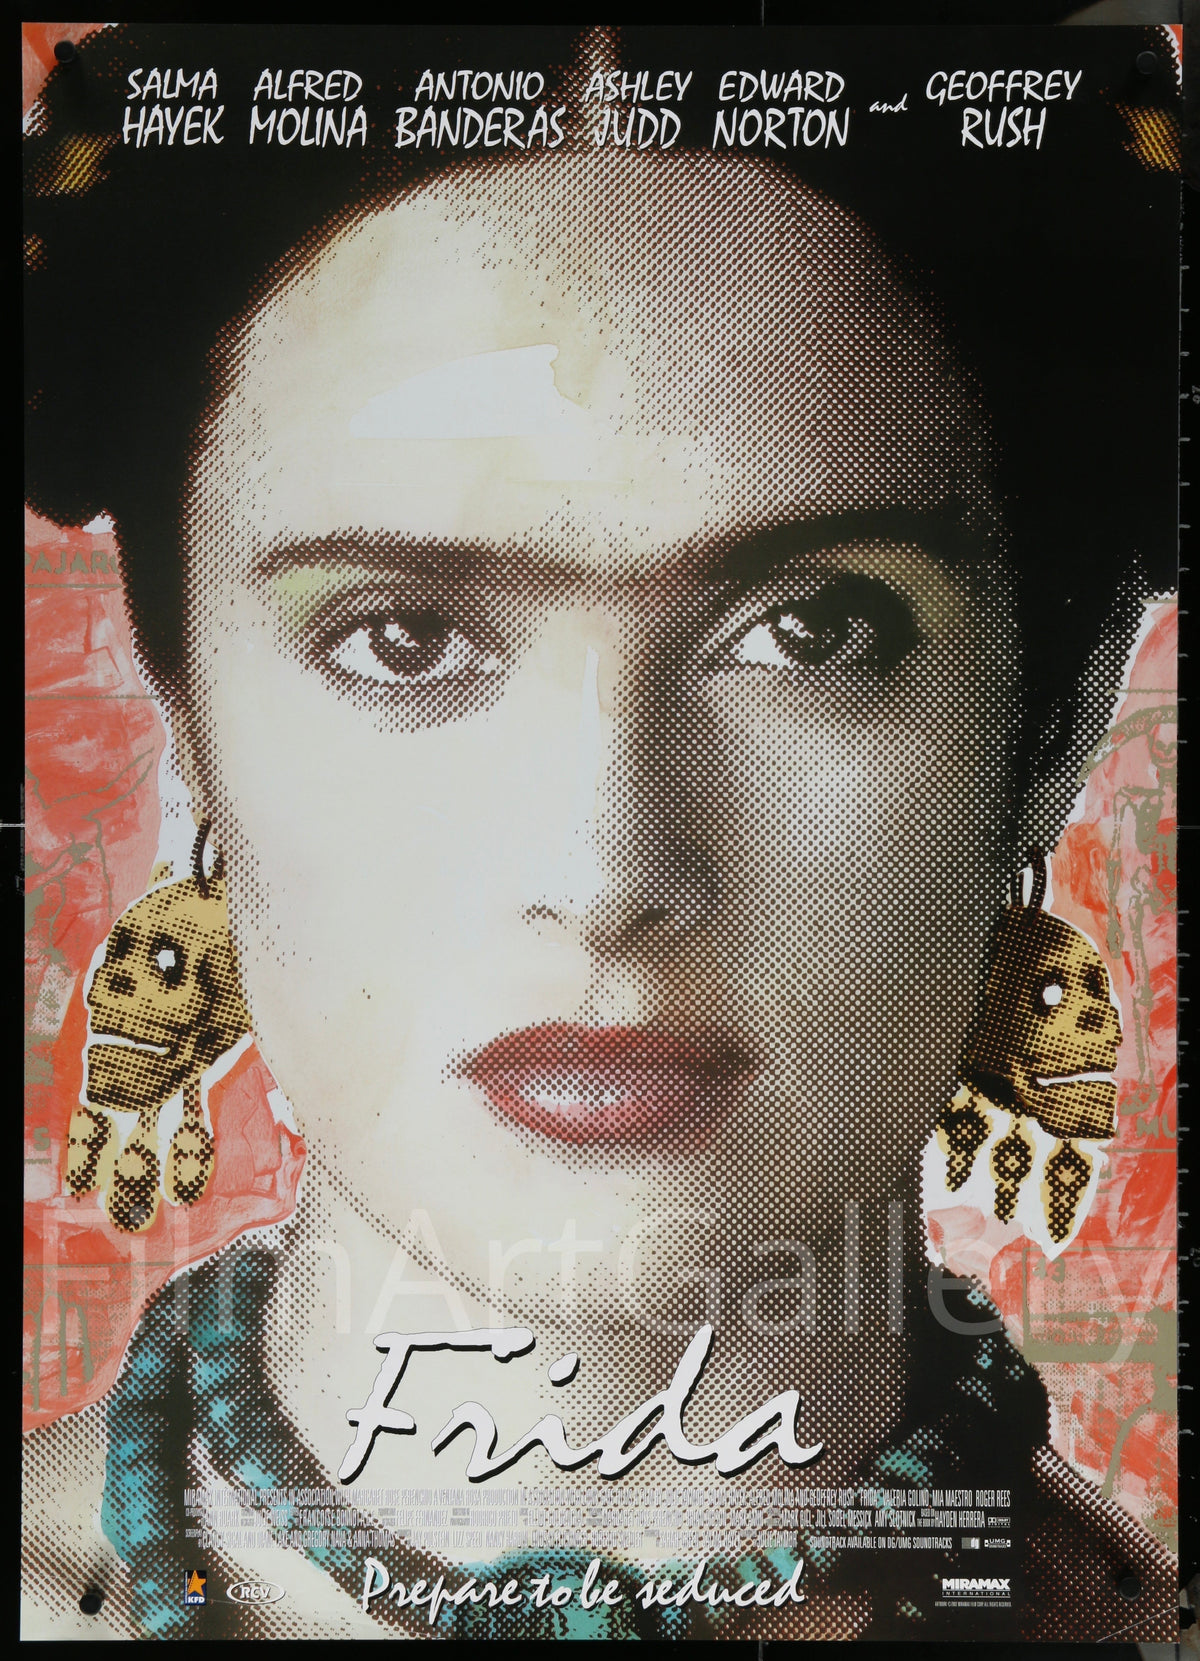 Frida 1 Sheet (27x41) Original Vintage Movie Poster